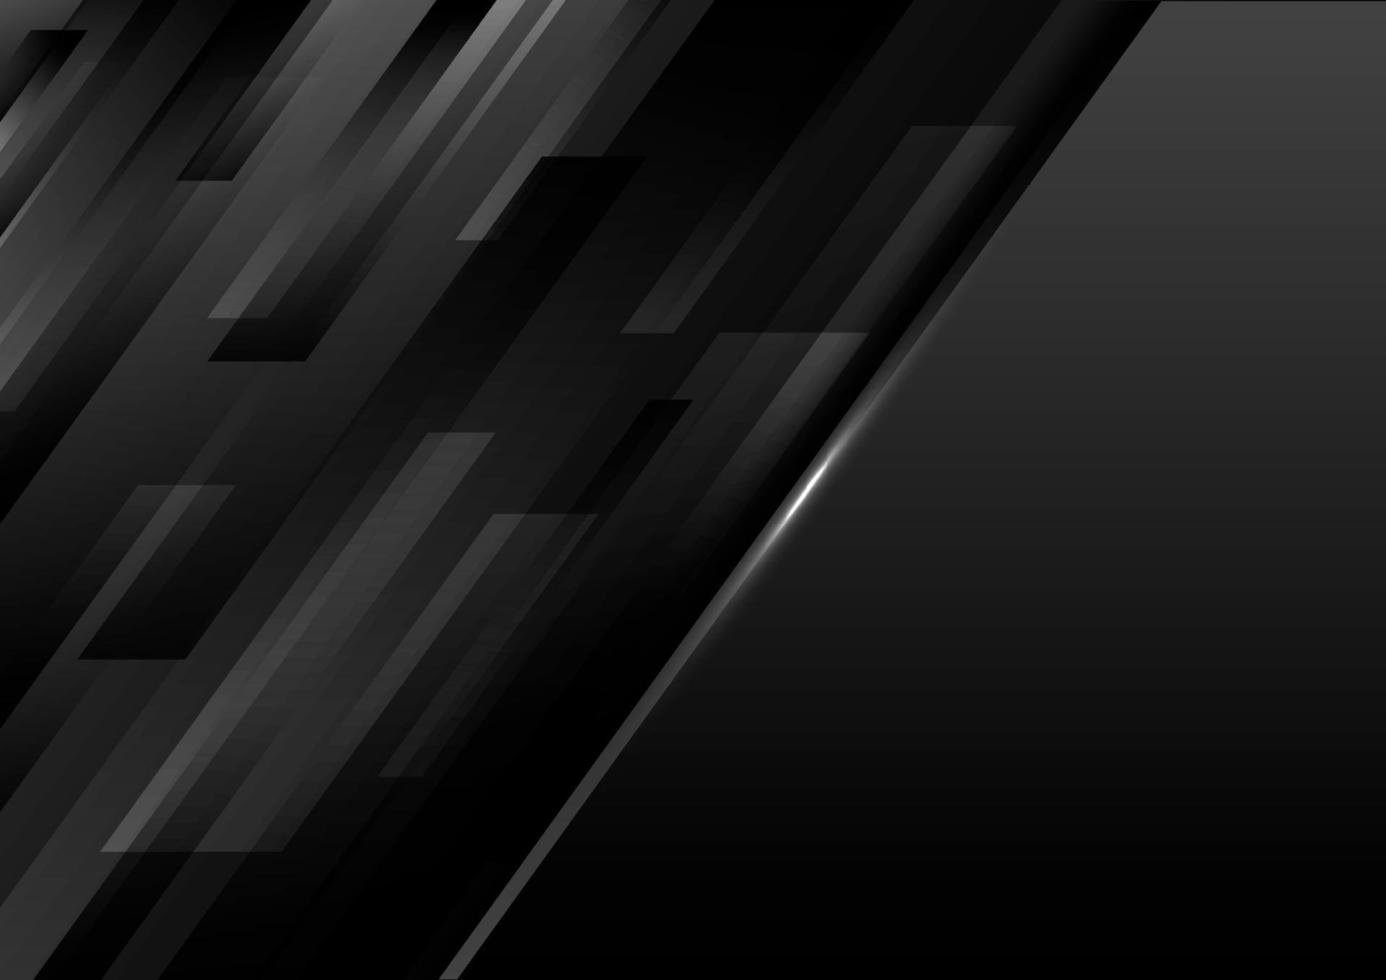 Plantilla moderna abstracta rayas diagonales geométricas negras sobre fondo oscuro vector